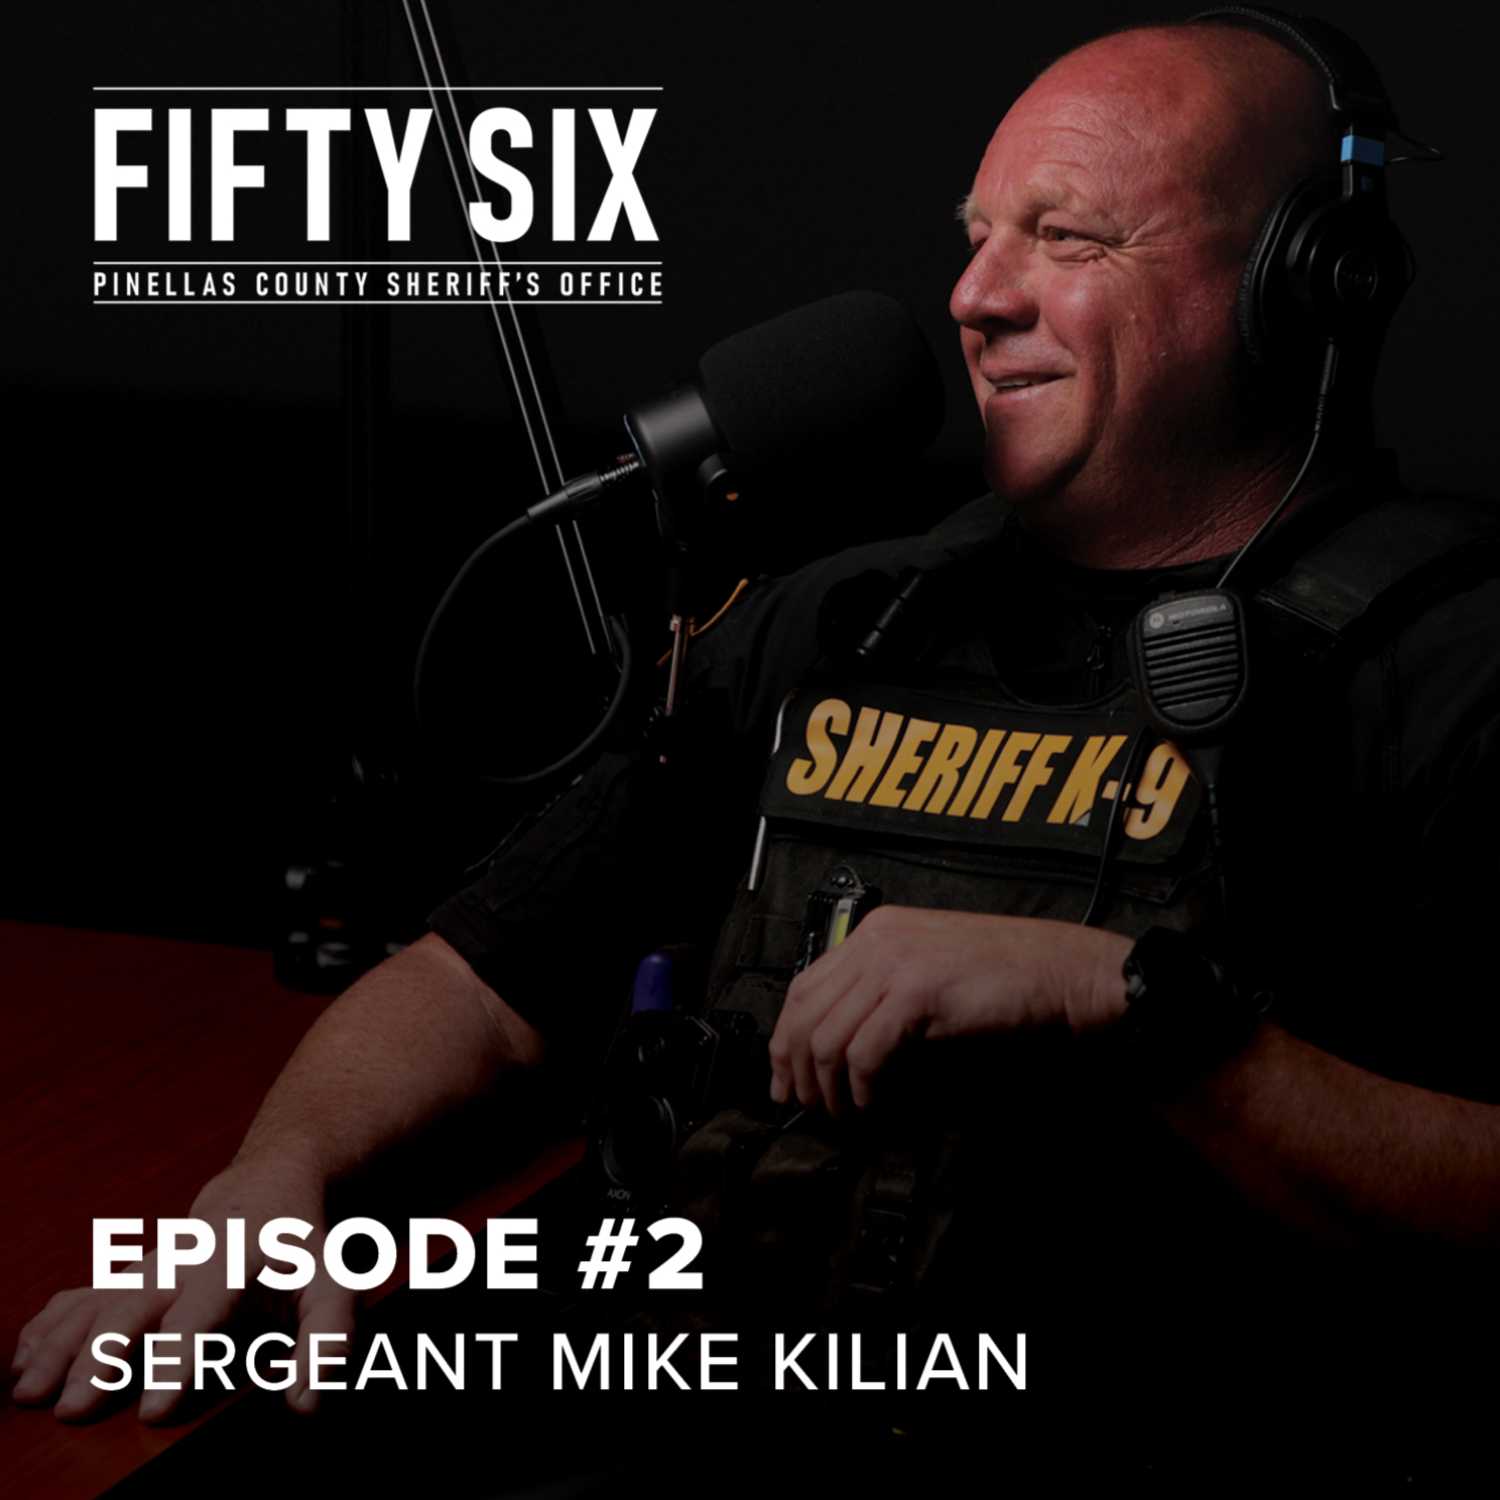 #2 "Waco on the Withlacoochee" - Sergeant Mike Kilian